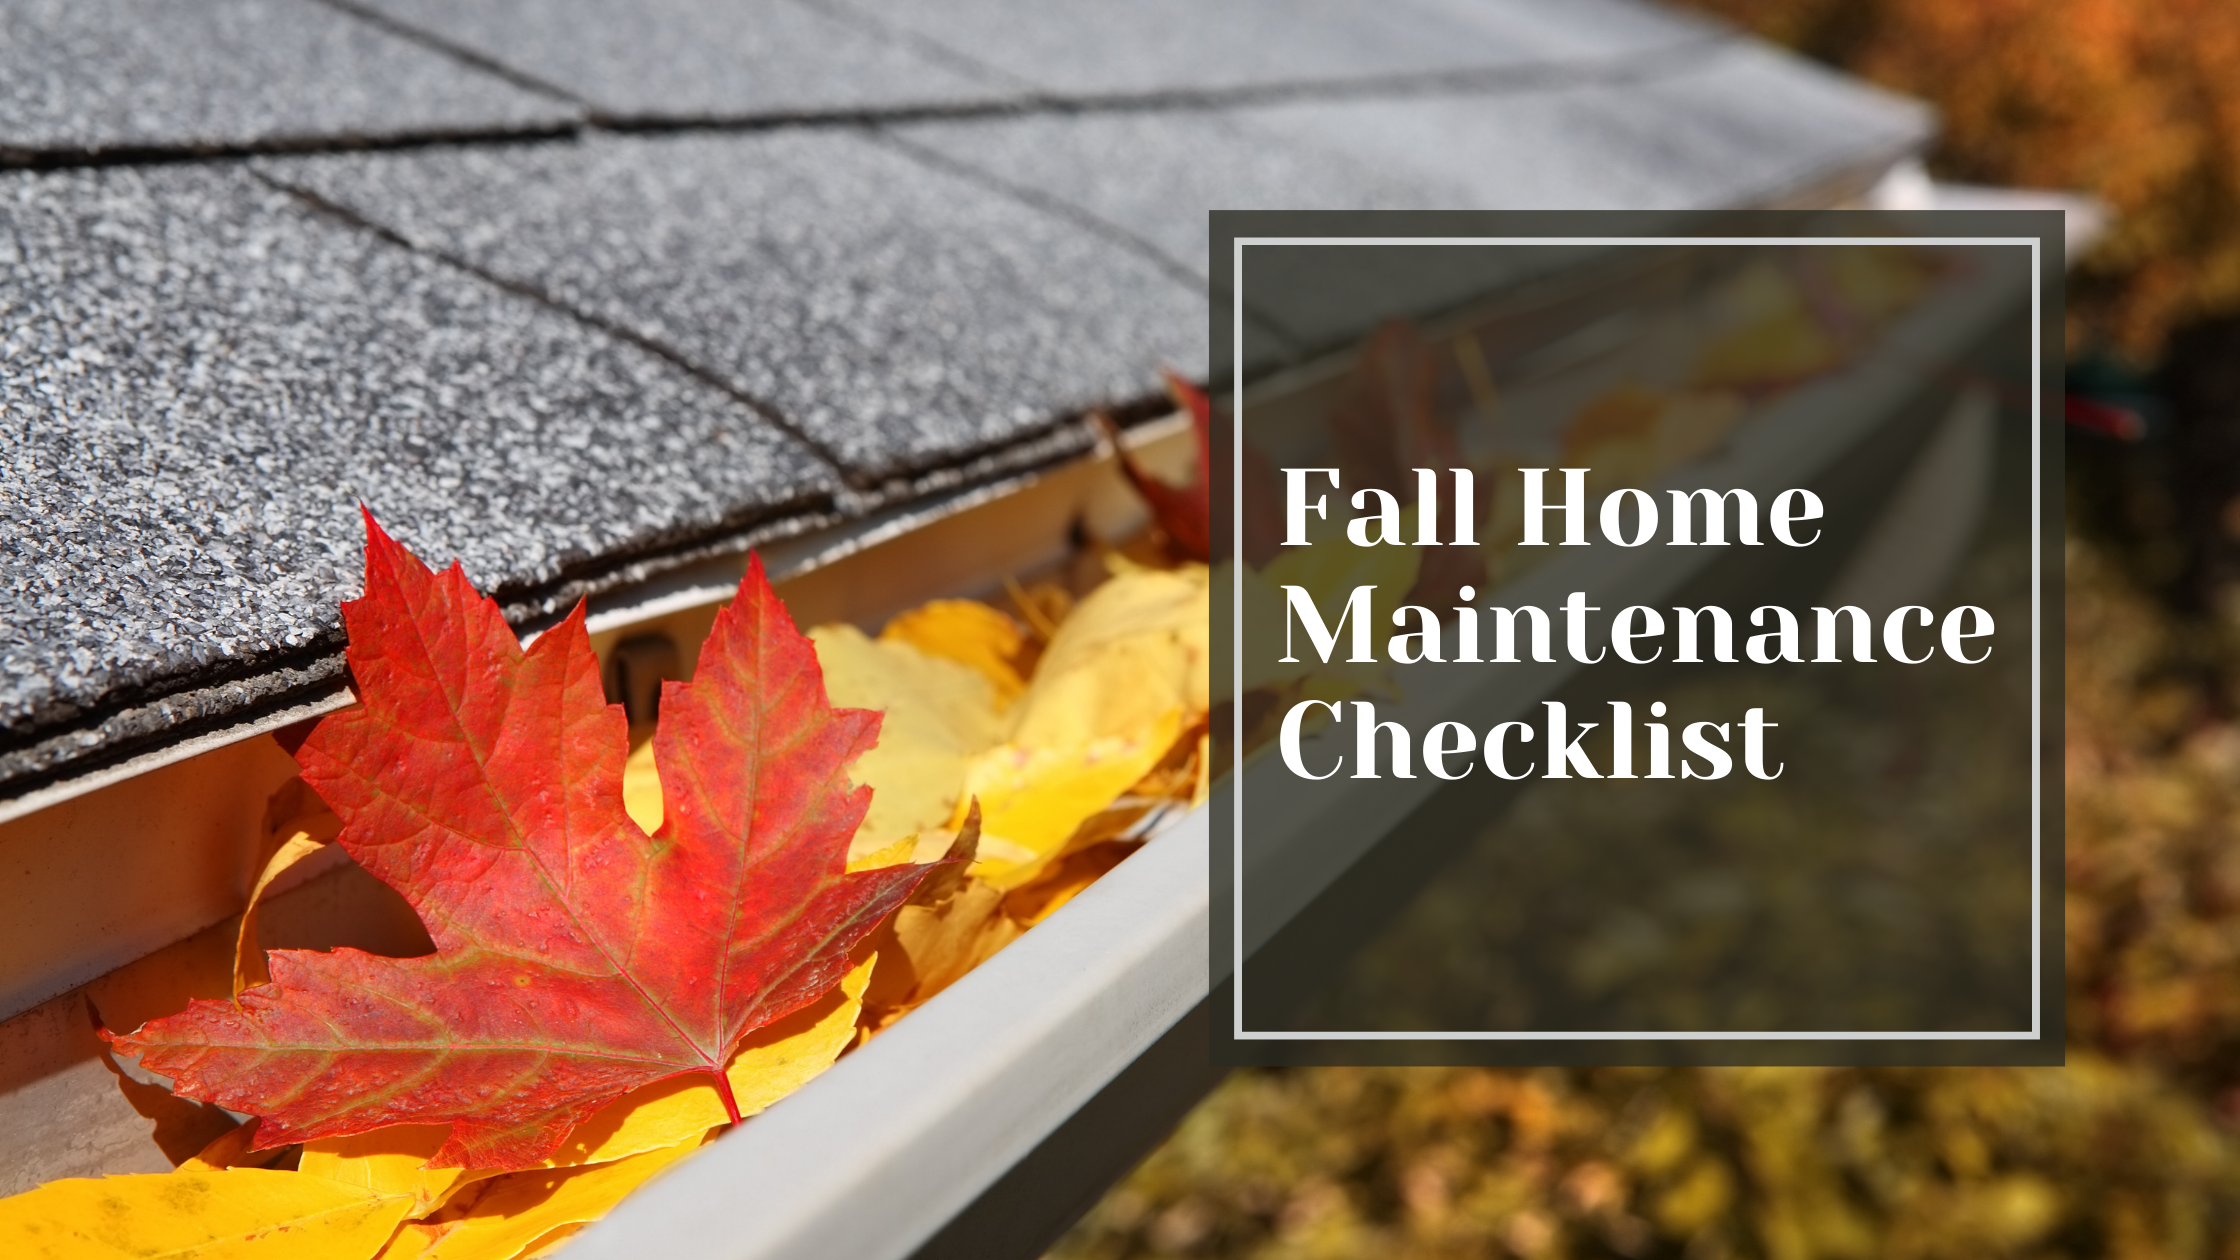  Fall Home Maintenance Checklist: 15 Steps